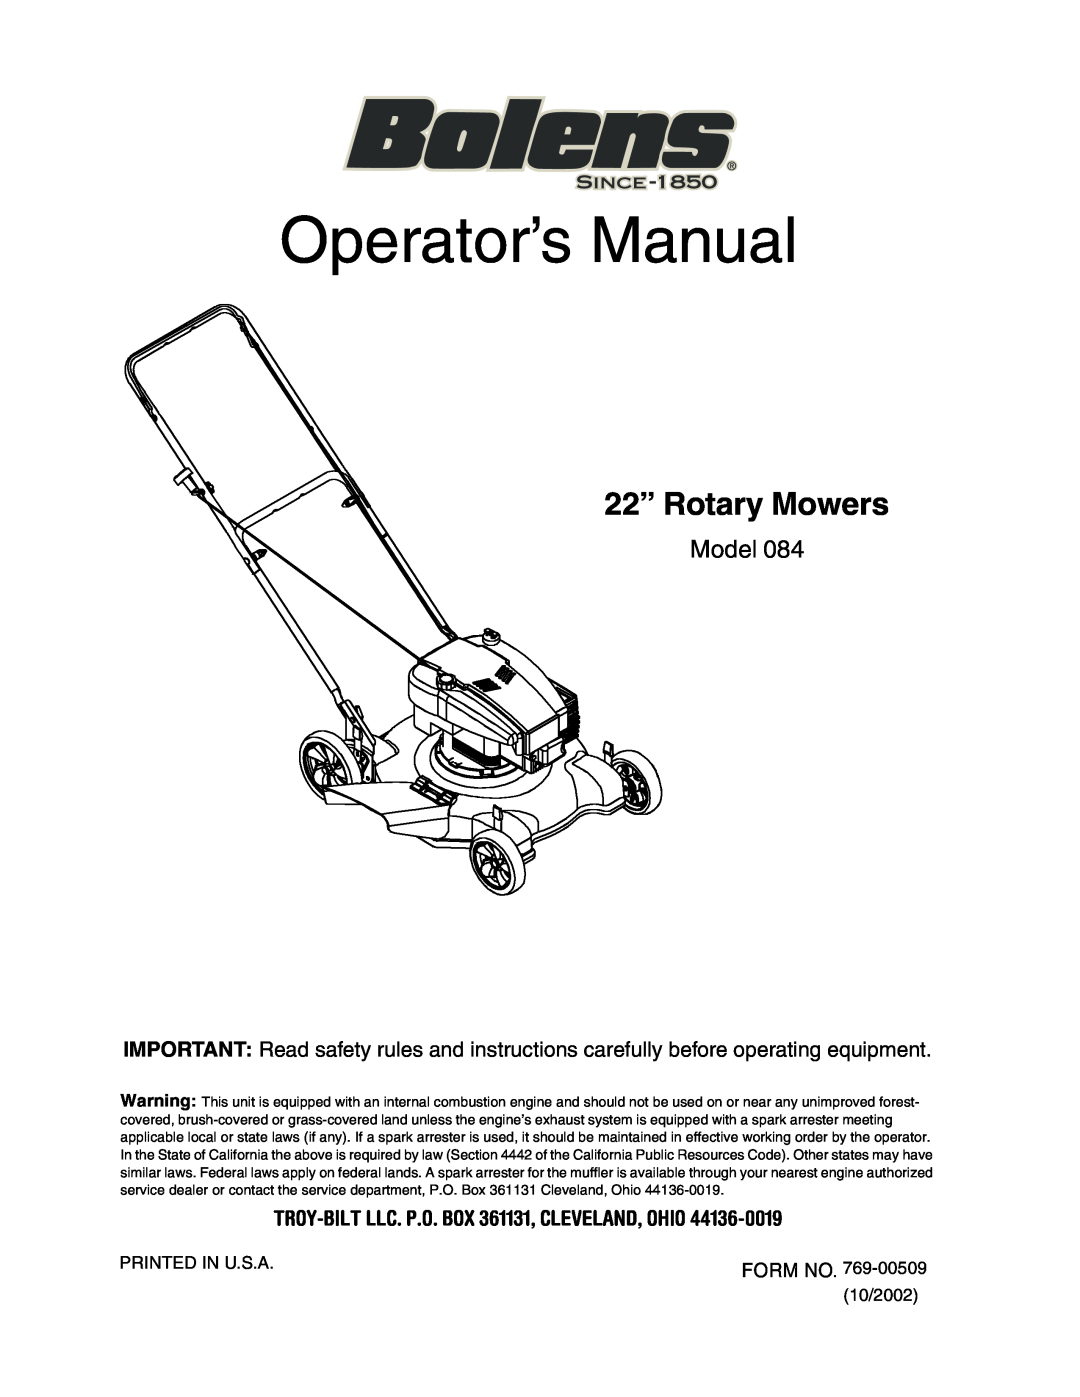 Bolens 84 manual Operator’s Manual, 22” Rotary Mowers, Model, TROY-BILT LLC. P.O. BOX 361131, CLEVELAND, OHIO 